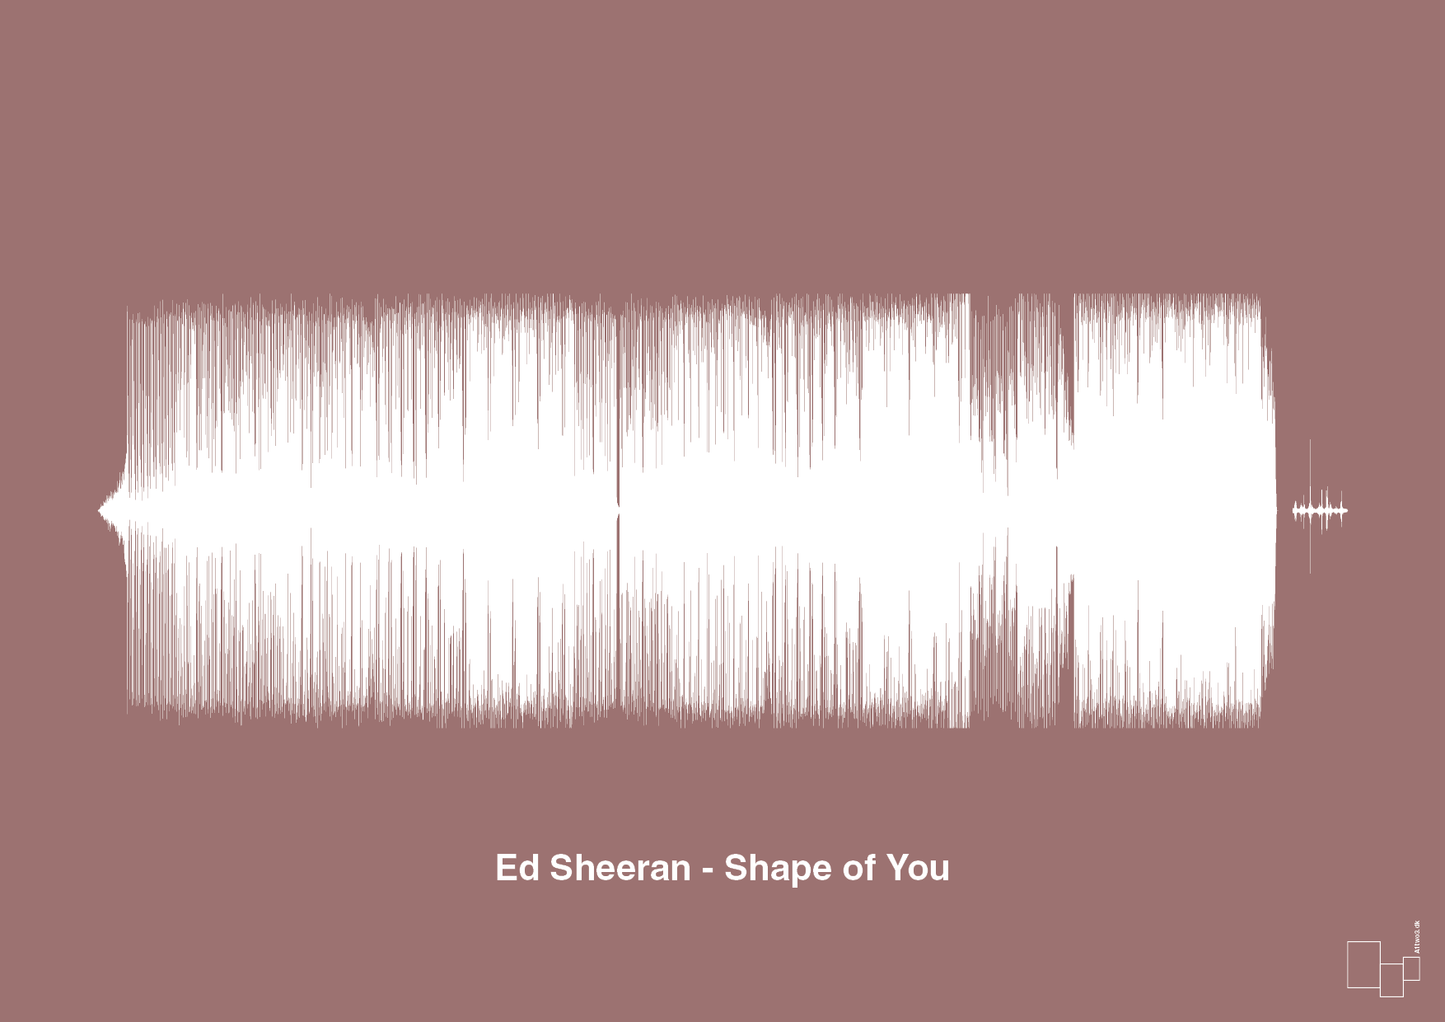 ed sheeran - shape of you - Plakat med Musik i Plum